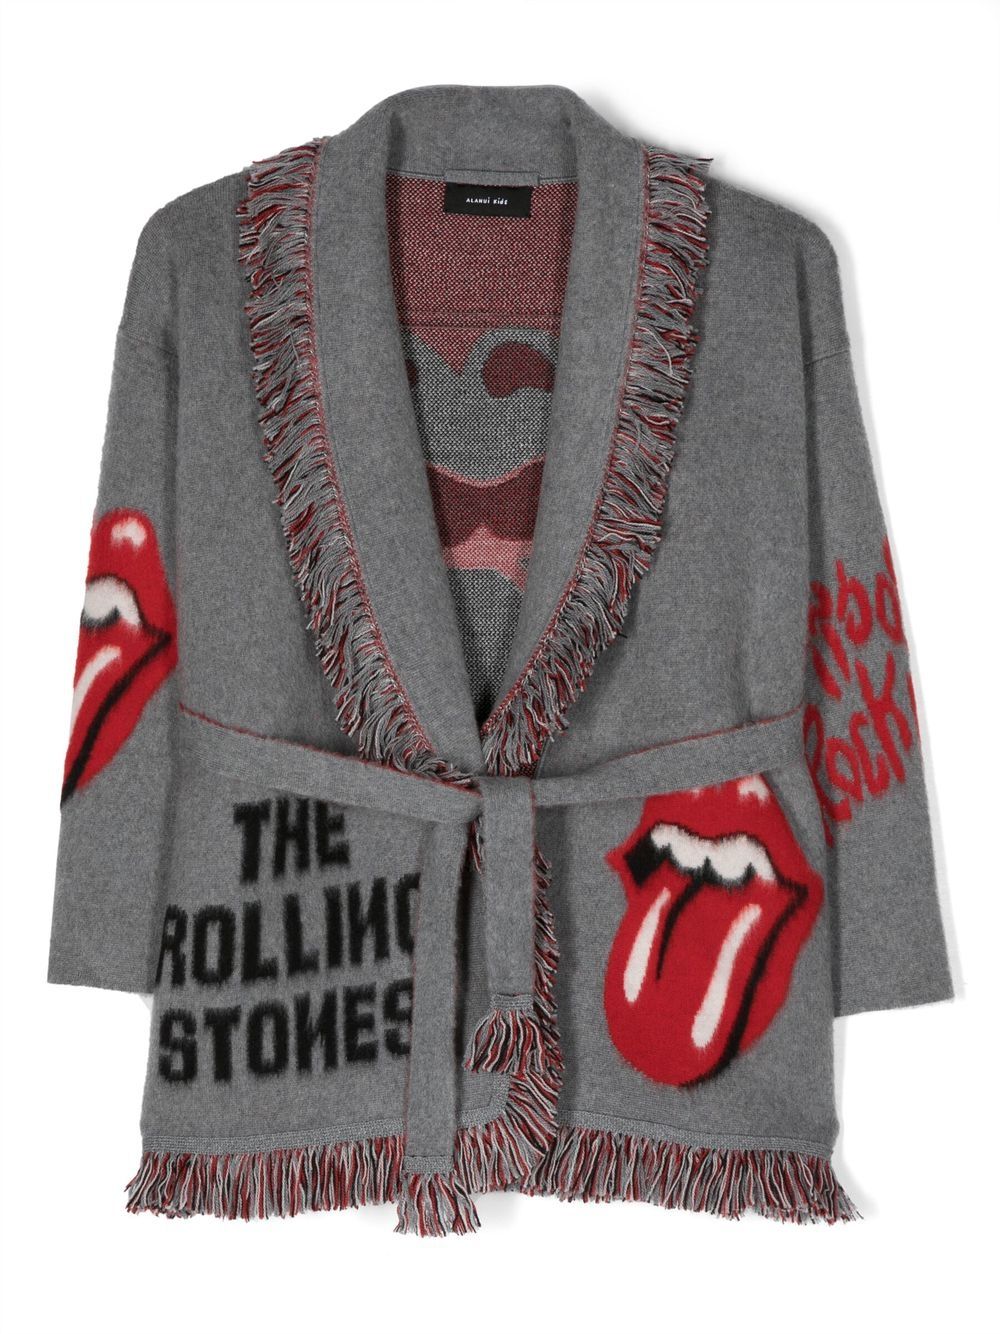 Rolling Stones knit fringed cardigan